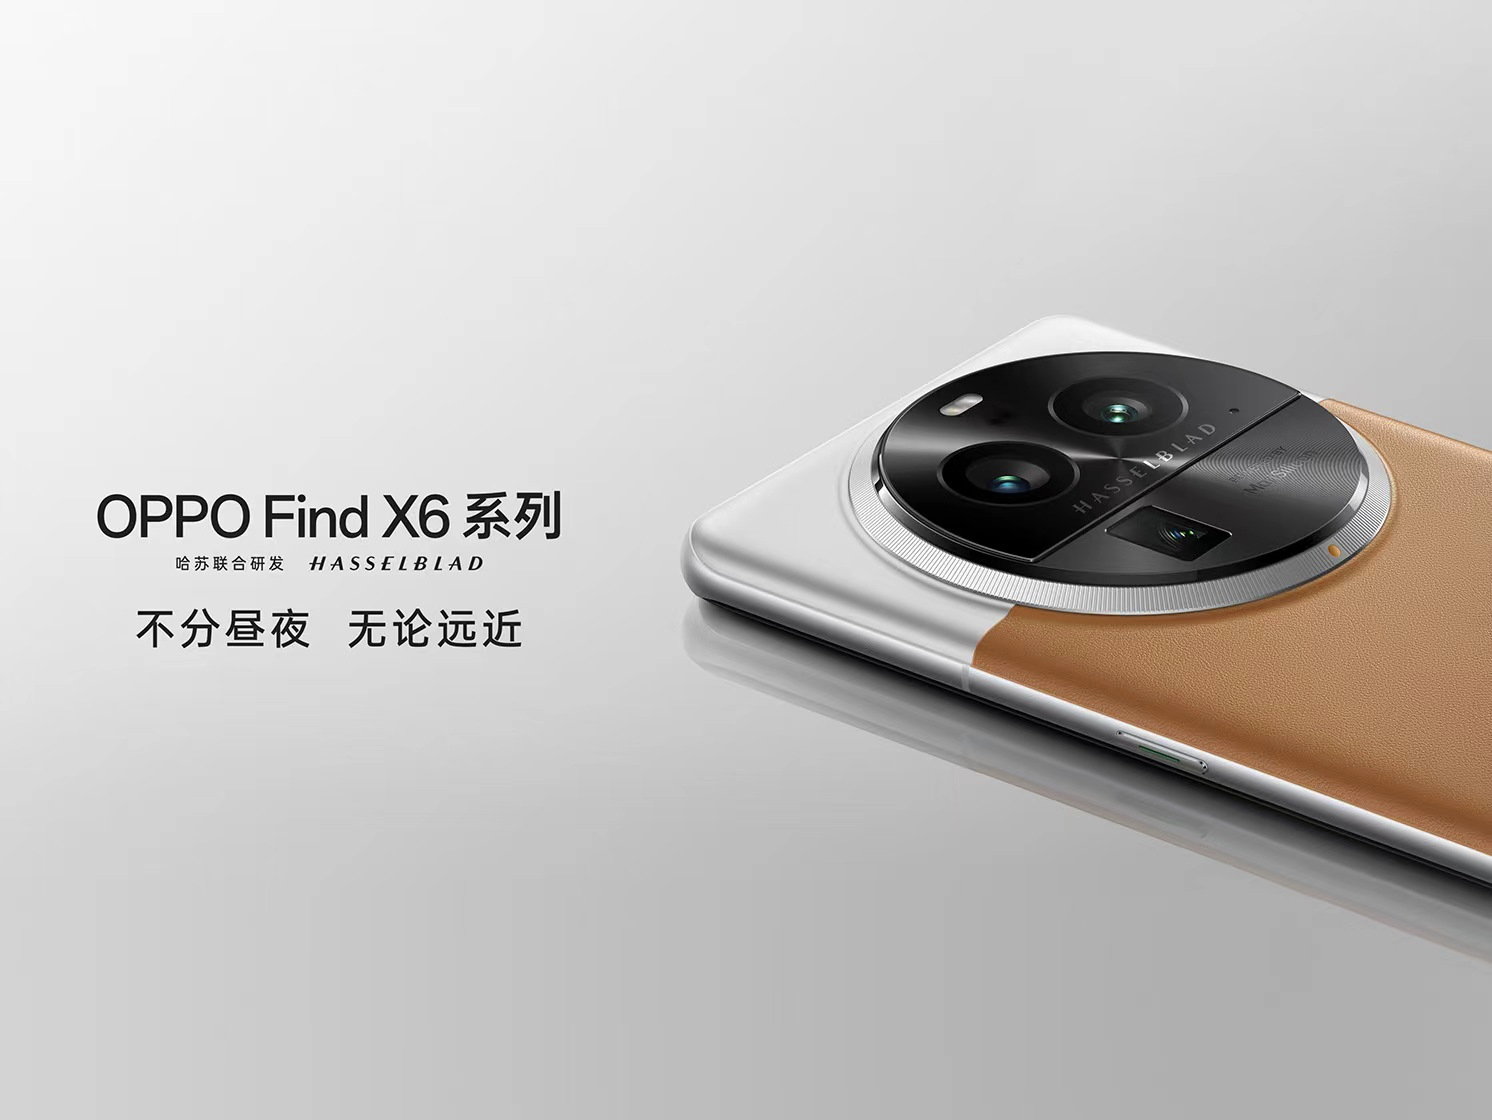 Oppo Find X6 Pro 5G 6.82 16/512GB 50MP Snapdragon8Gen2 5000mAh By FedEx